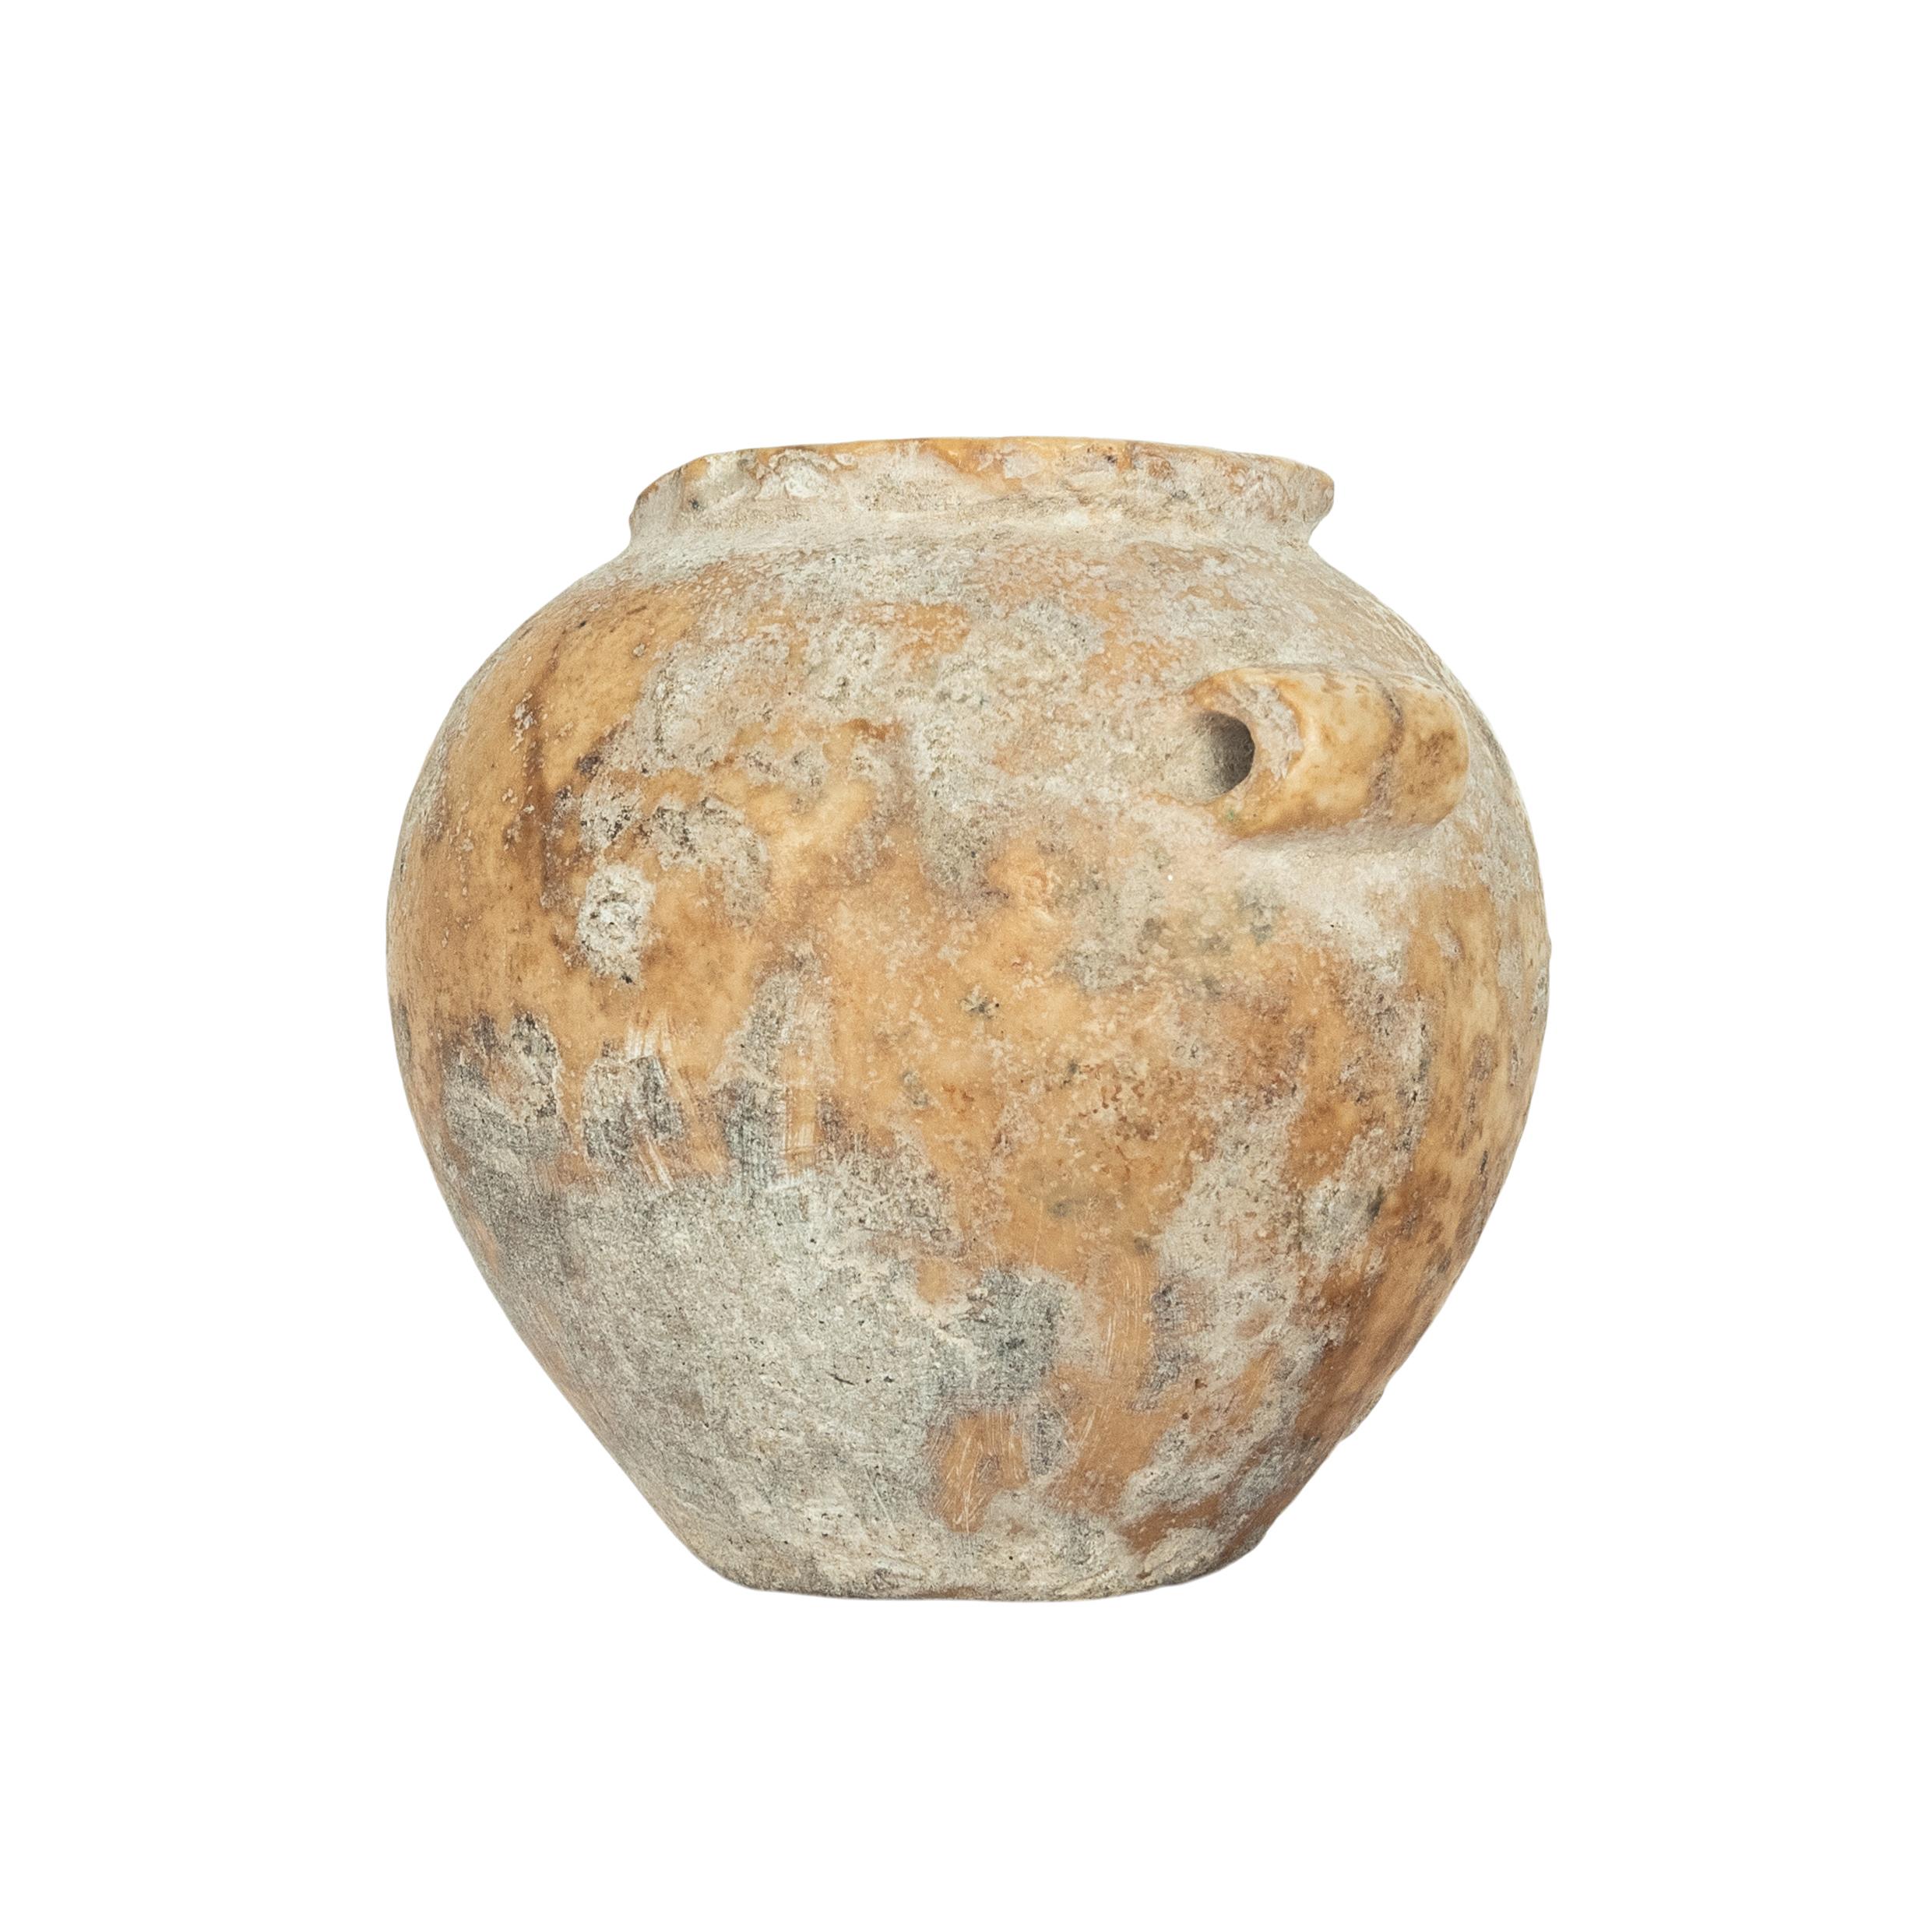 Hand-Carved Ancient Egyptian Old Kingdom Miniature Lime Stone Vessel Jar 2600-2800 BCE For Sale